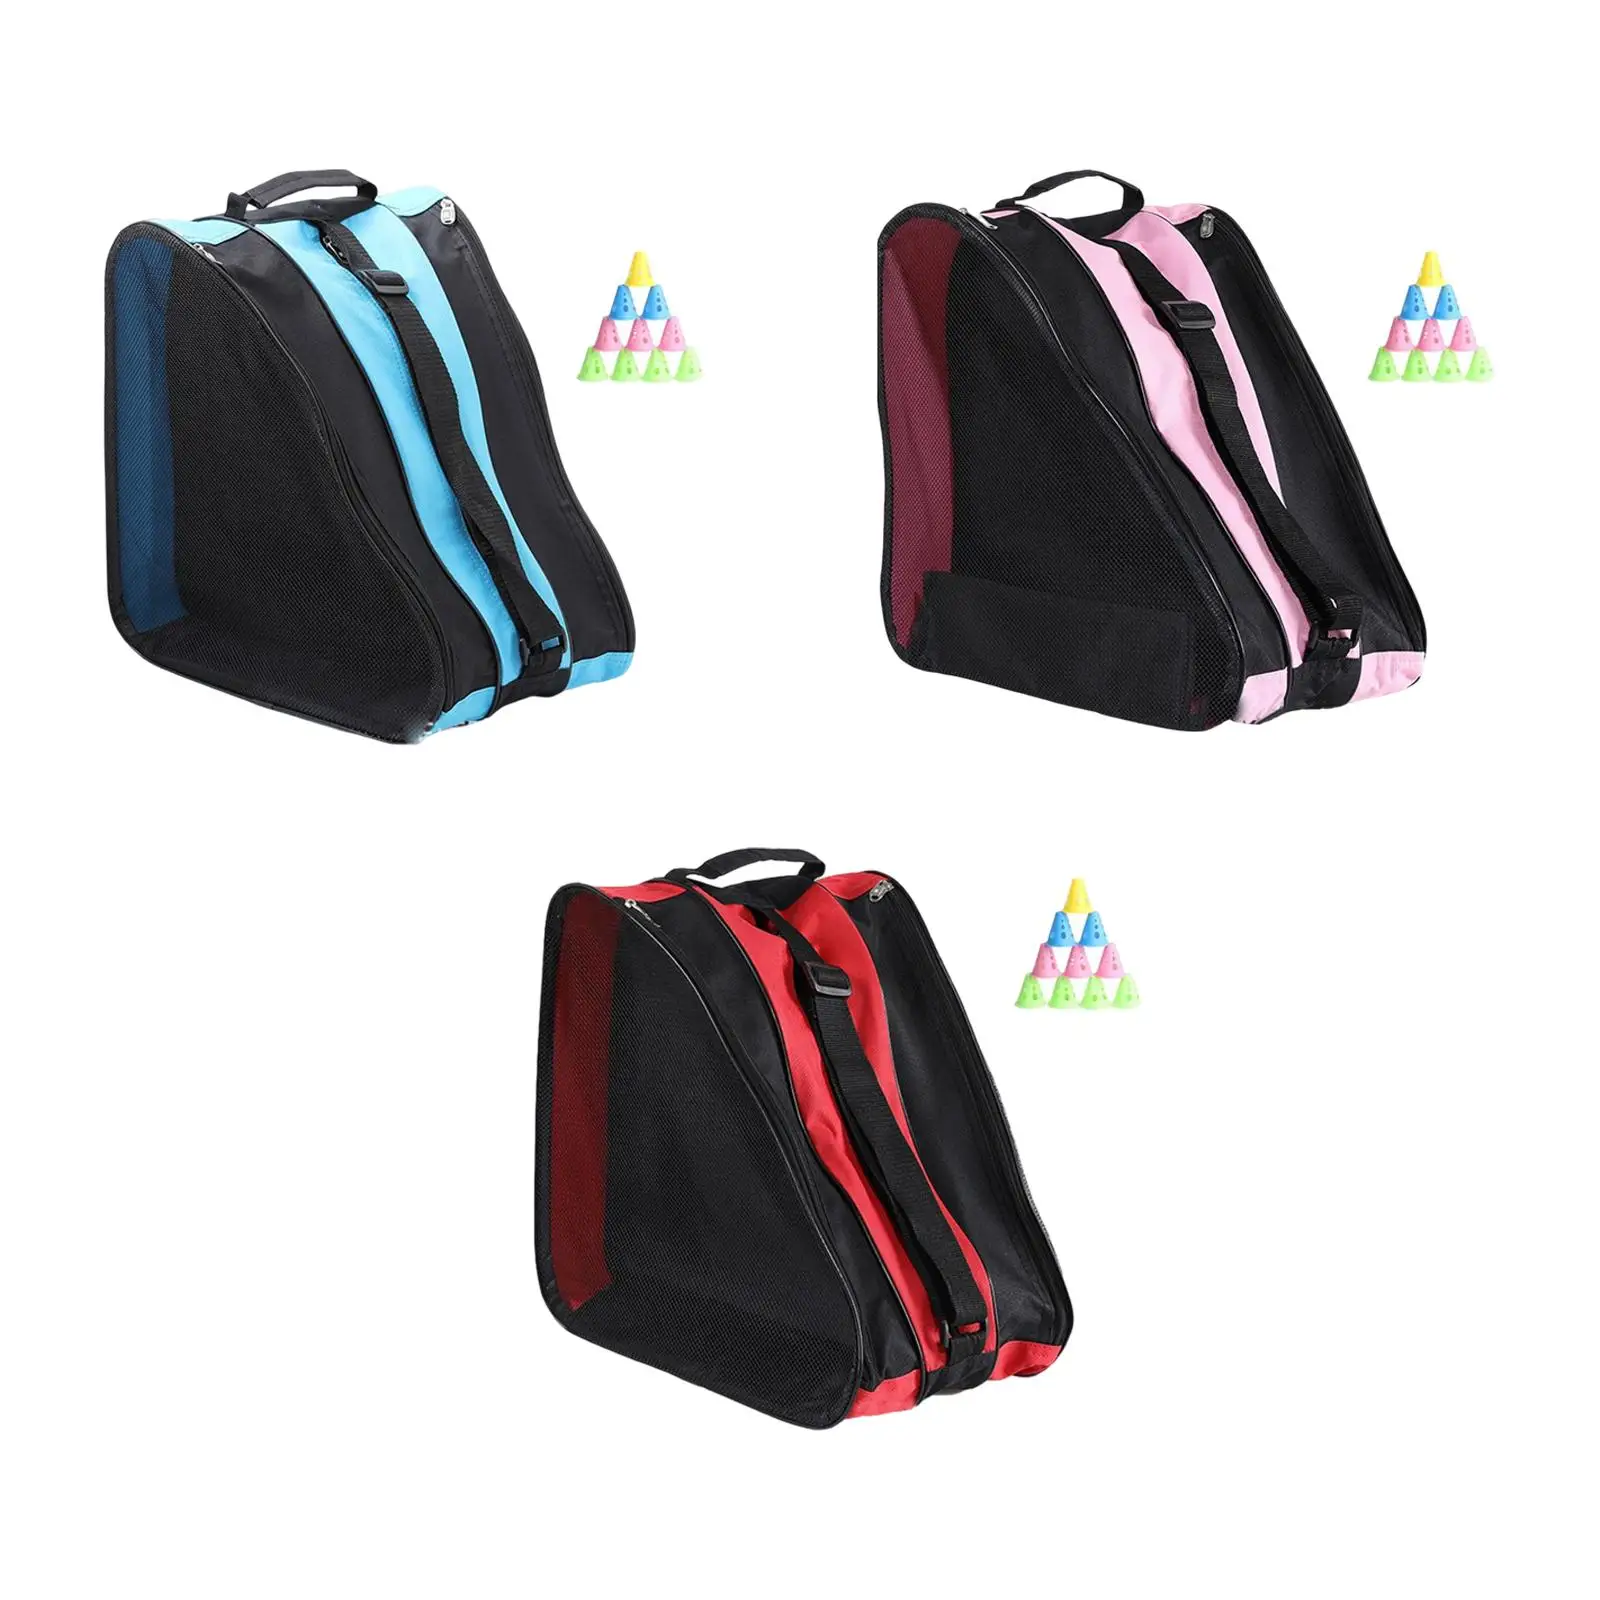 Portable Roller Skate Bags Breathable Ice Skates Bag Unisex Skating Shoes Storage Bag for Adult Kid Ice Hockey Skate Ice Skates